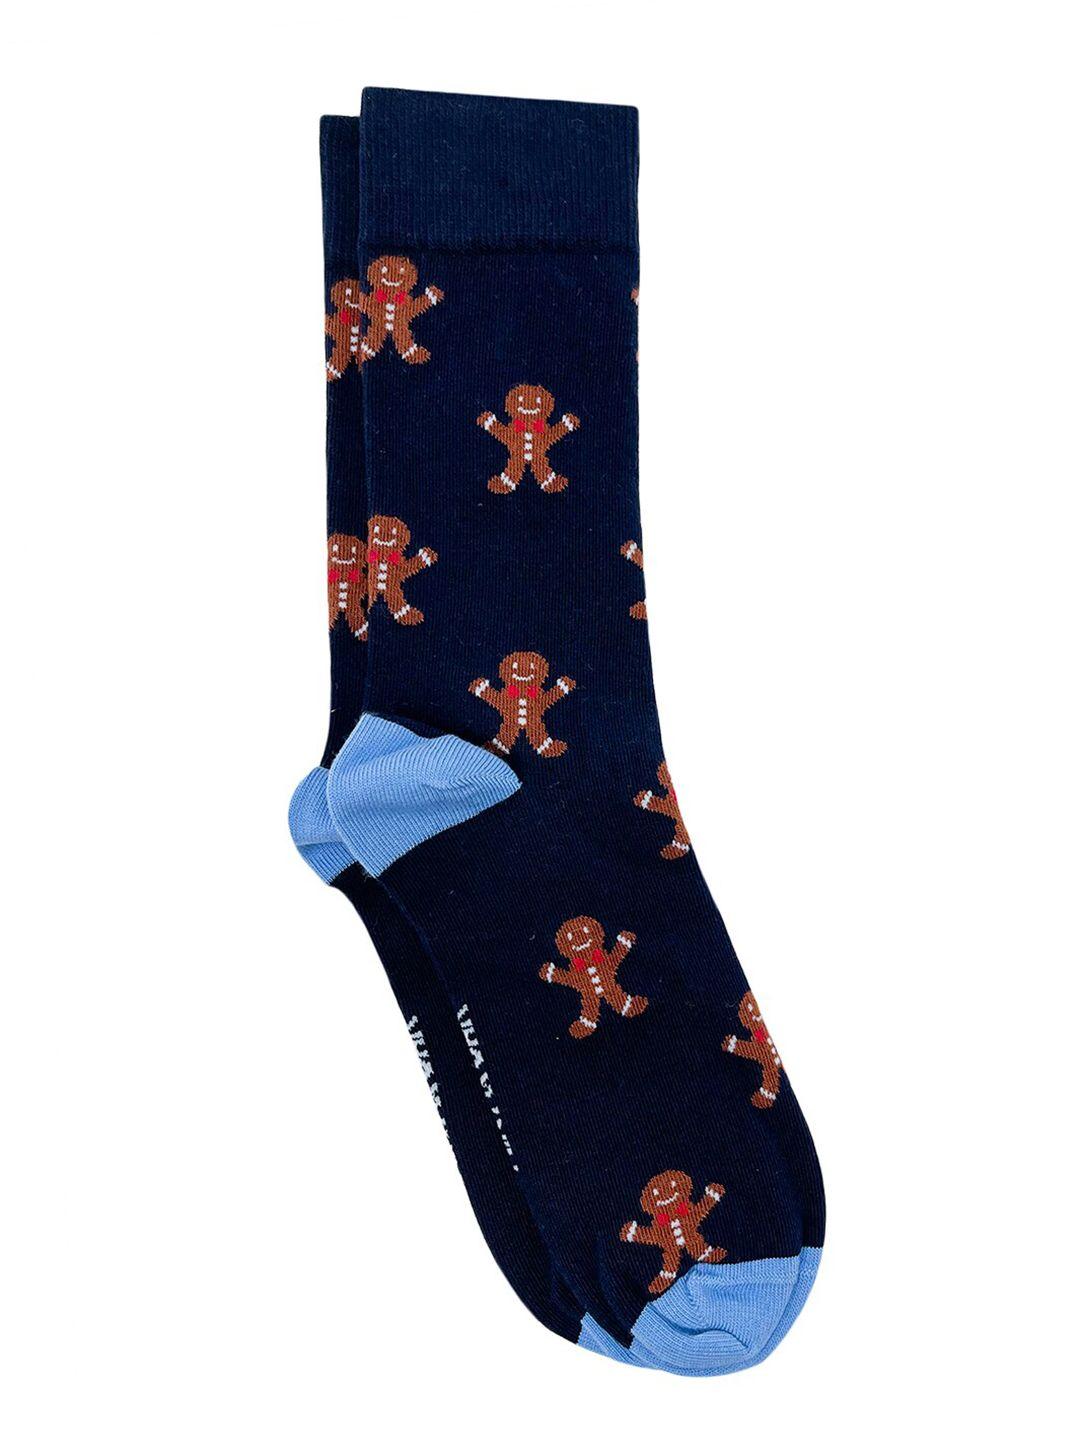 mint-&-oak-men-navy-blue-gingerbread-patterned-anti-bacterial-above-ankle-socks